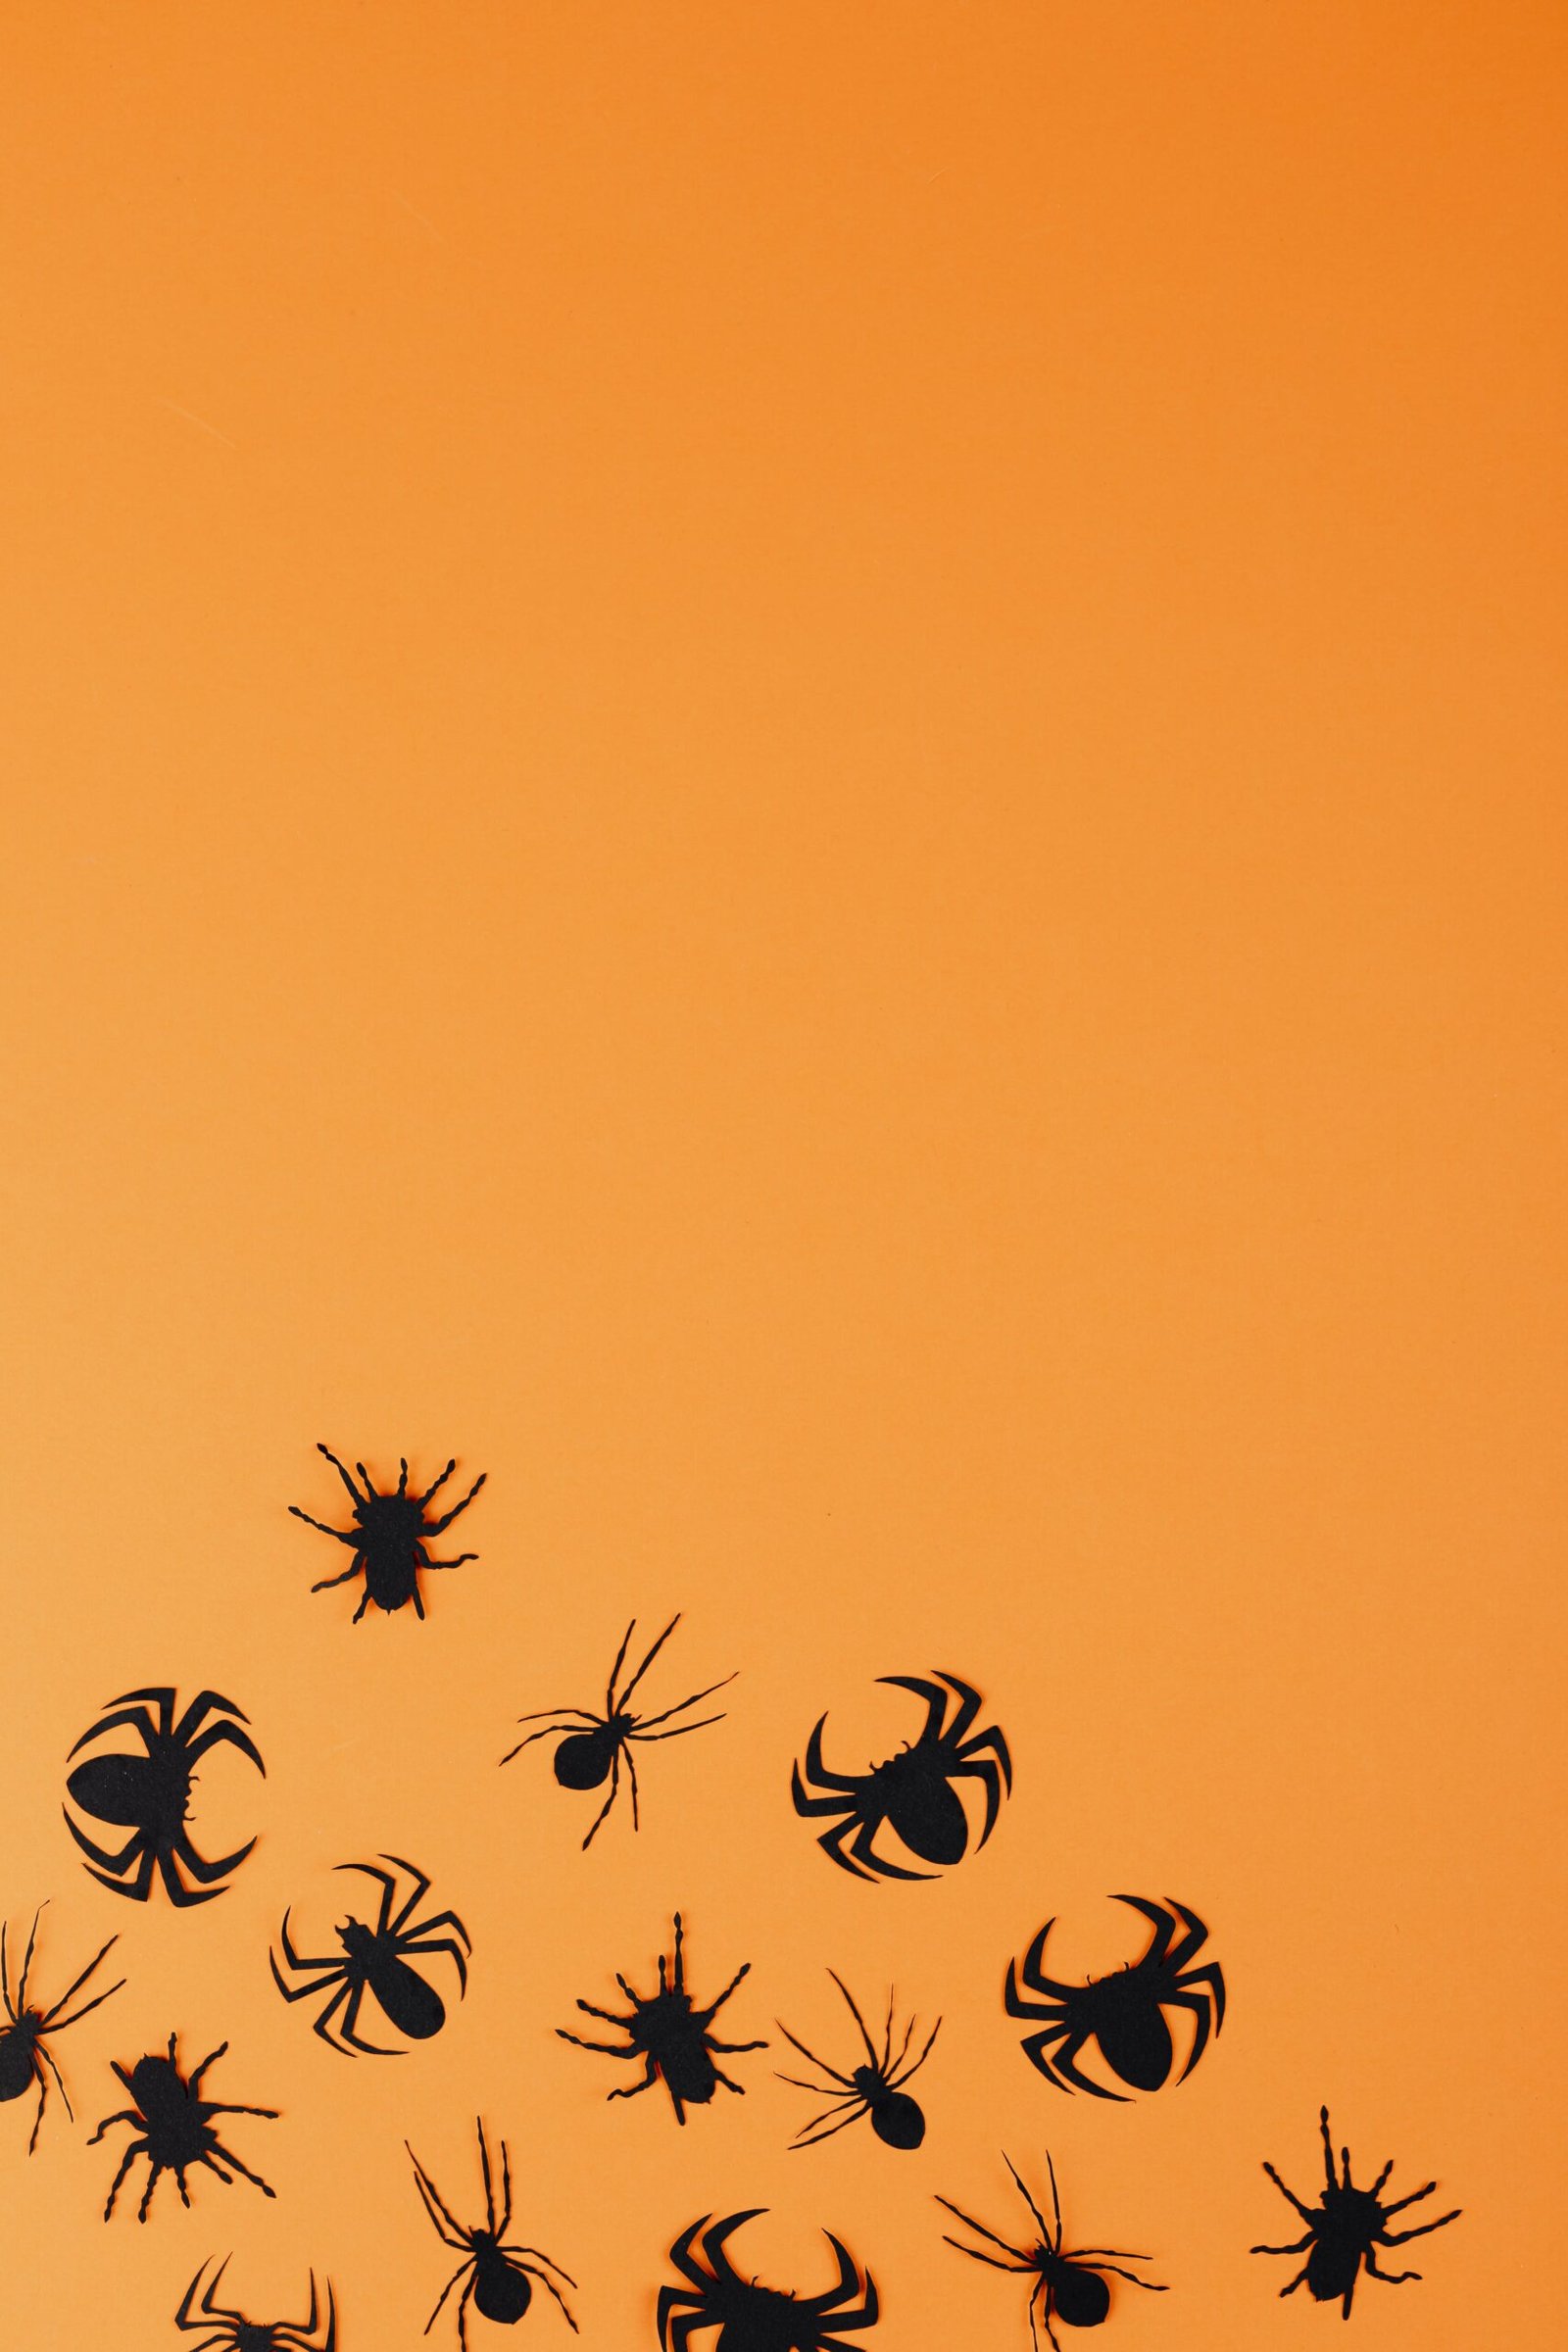 Can Tarantulas Be Threatened By Larger Predatory Arachnids Like Whip Scorpions?